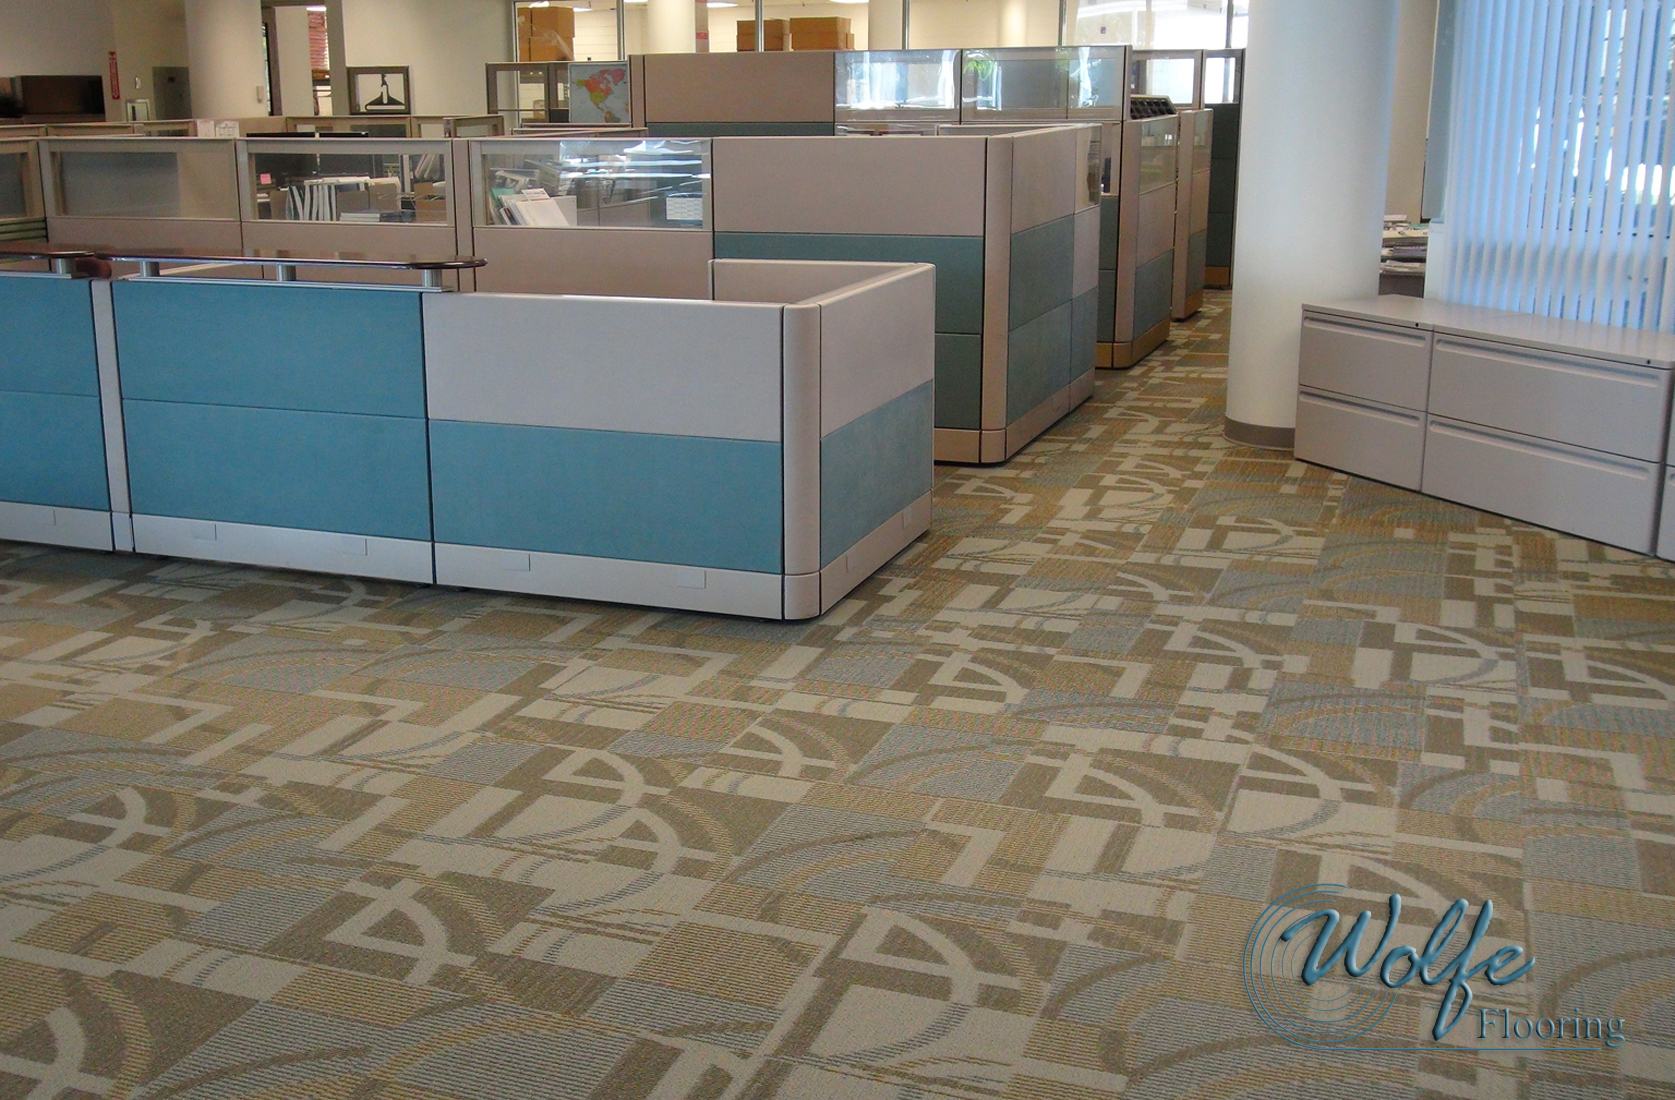 ... 05 commercial carpet tile manningtonu0027s landmark modular carpet color  canton ... ABKDAGG